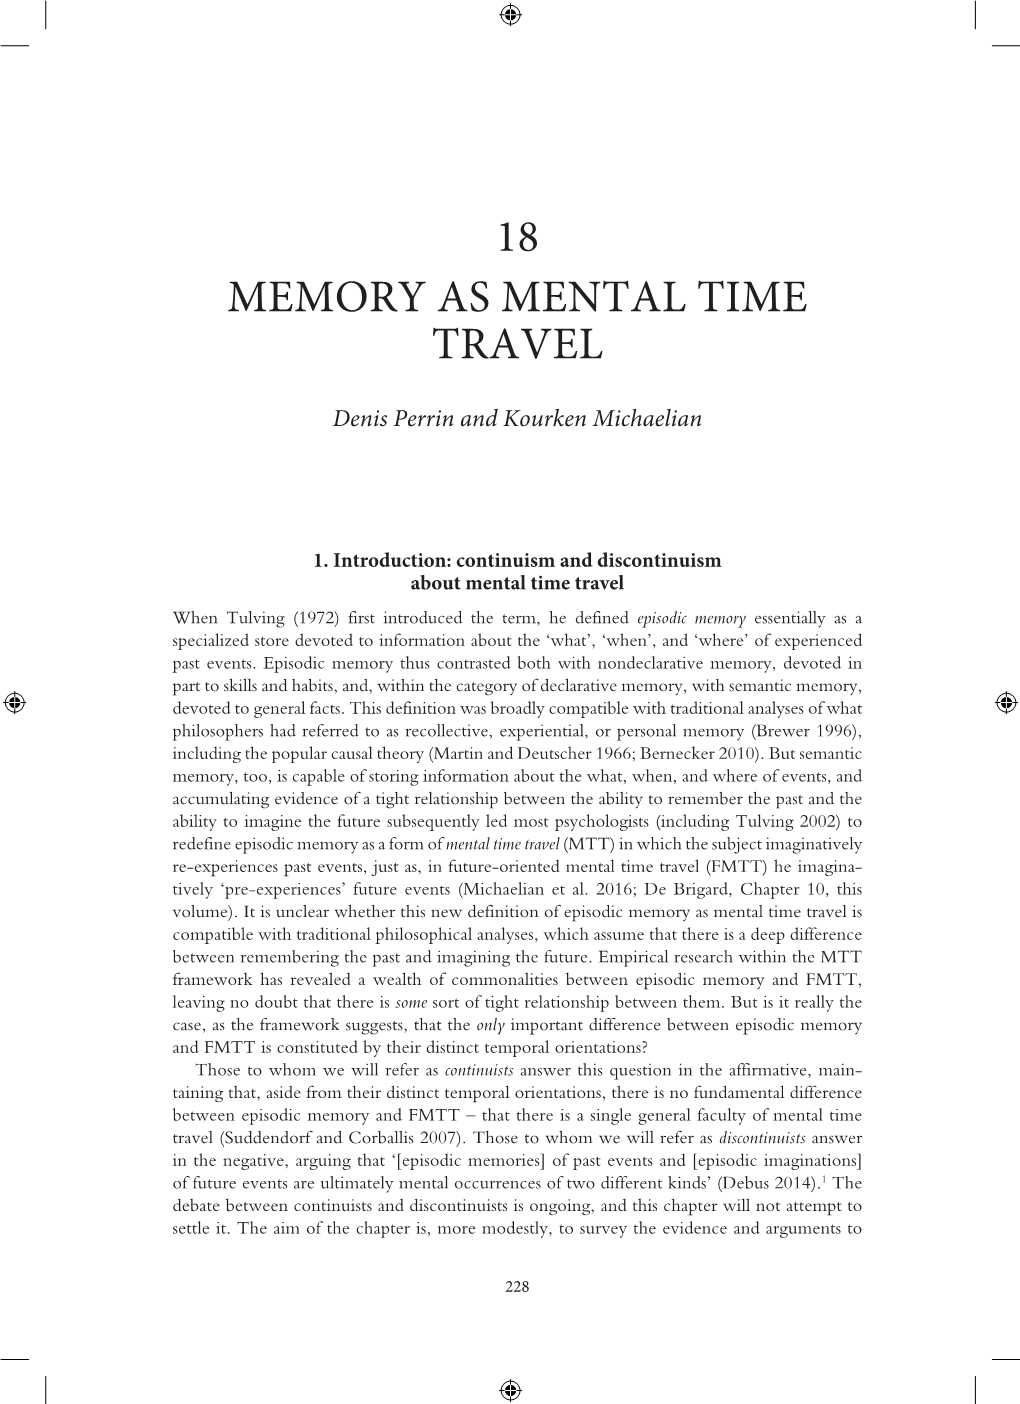 Memory As Mental Time Travel